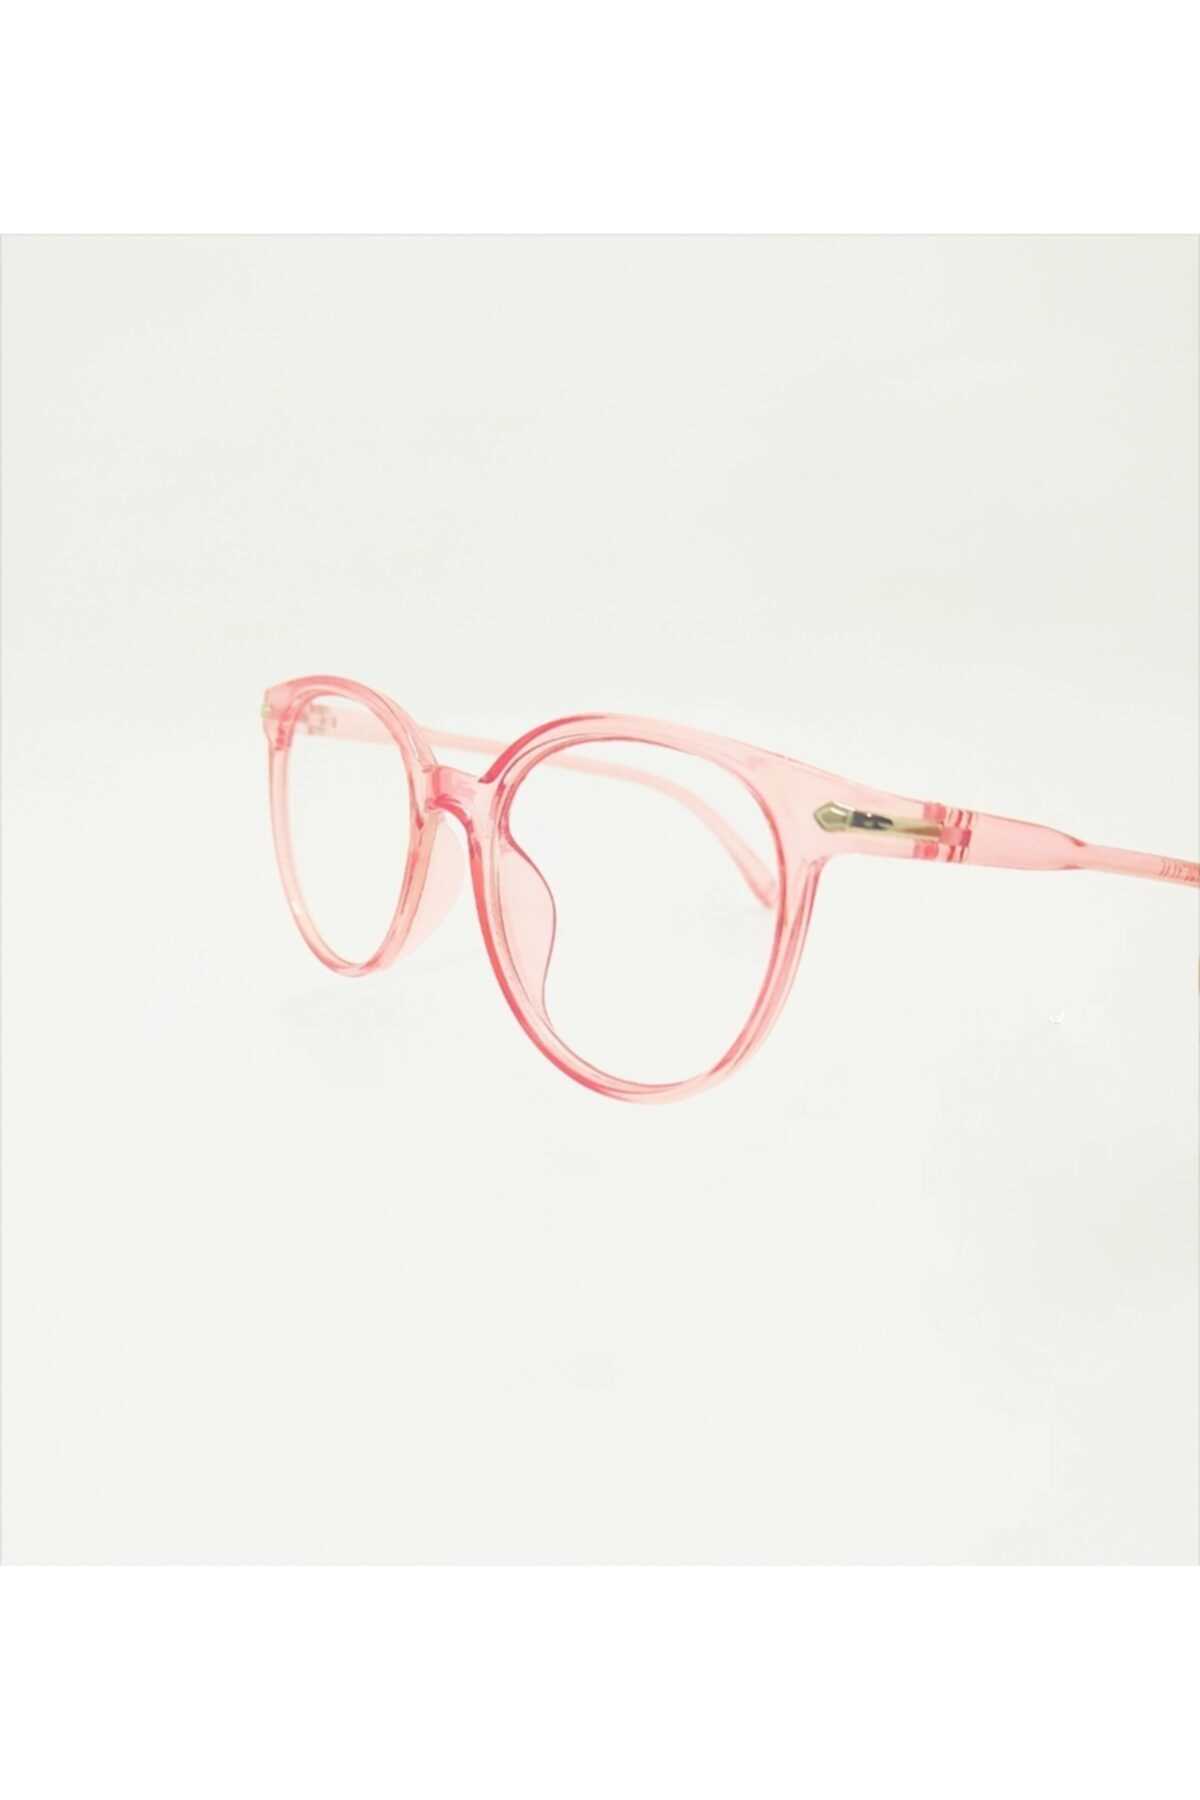 خرید عینک آفتابی زنانه شیک برند gulflower nude رنگ صورتی ty93428349